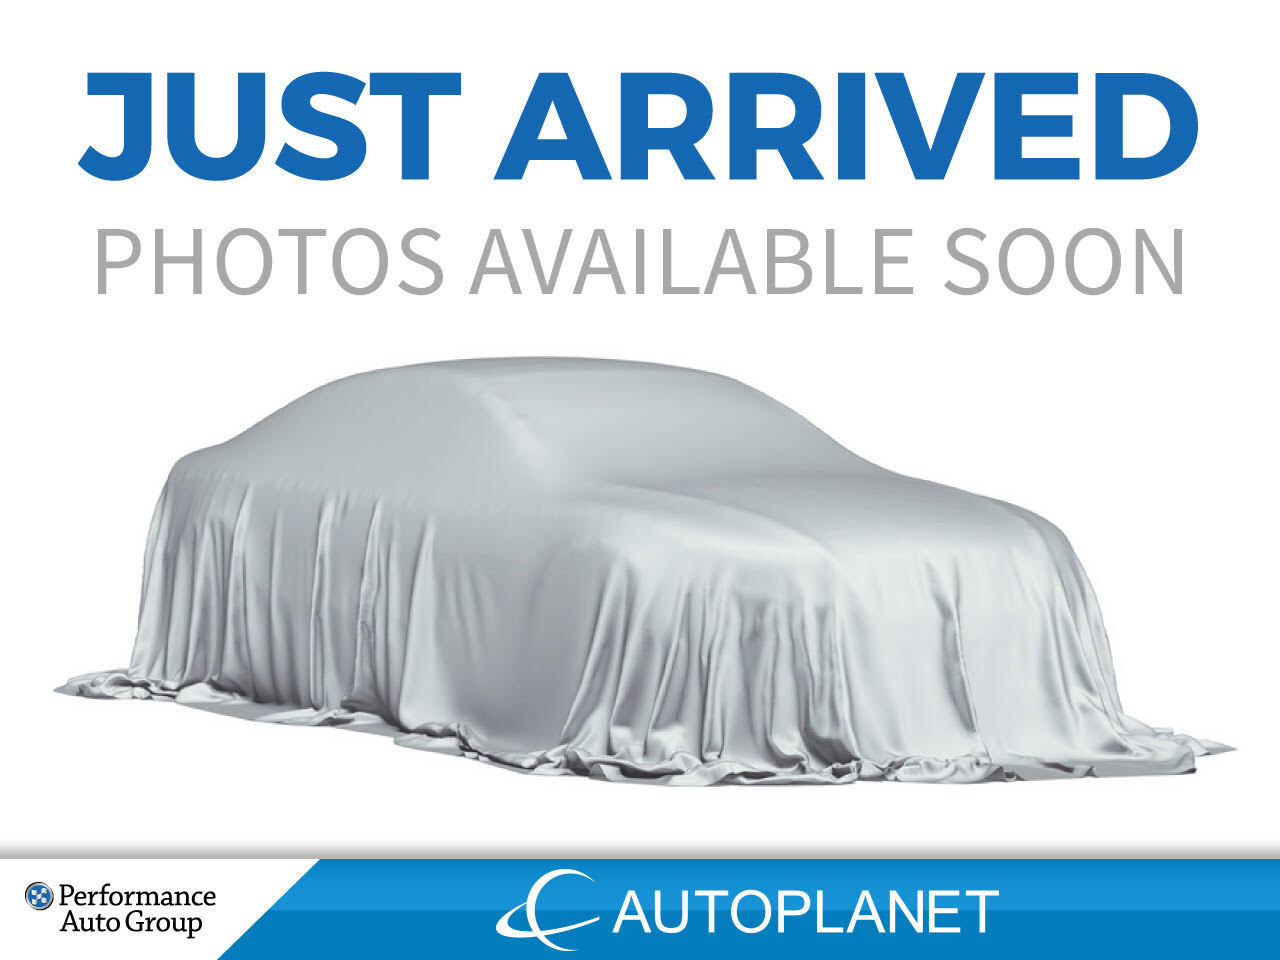 2022 Lexus GX 460 Premium AWD, 7 Seater, Navi, 360 Cam, Sunroof!